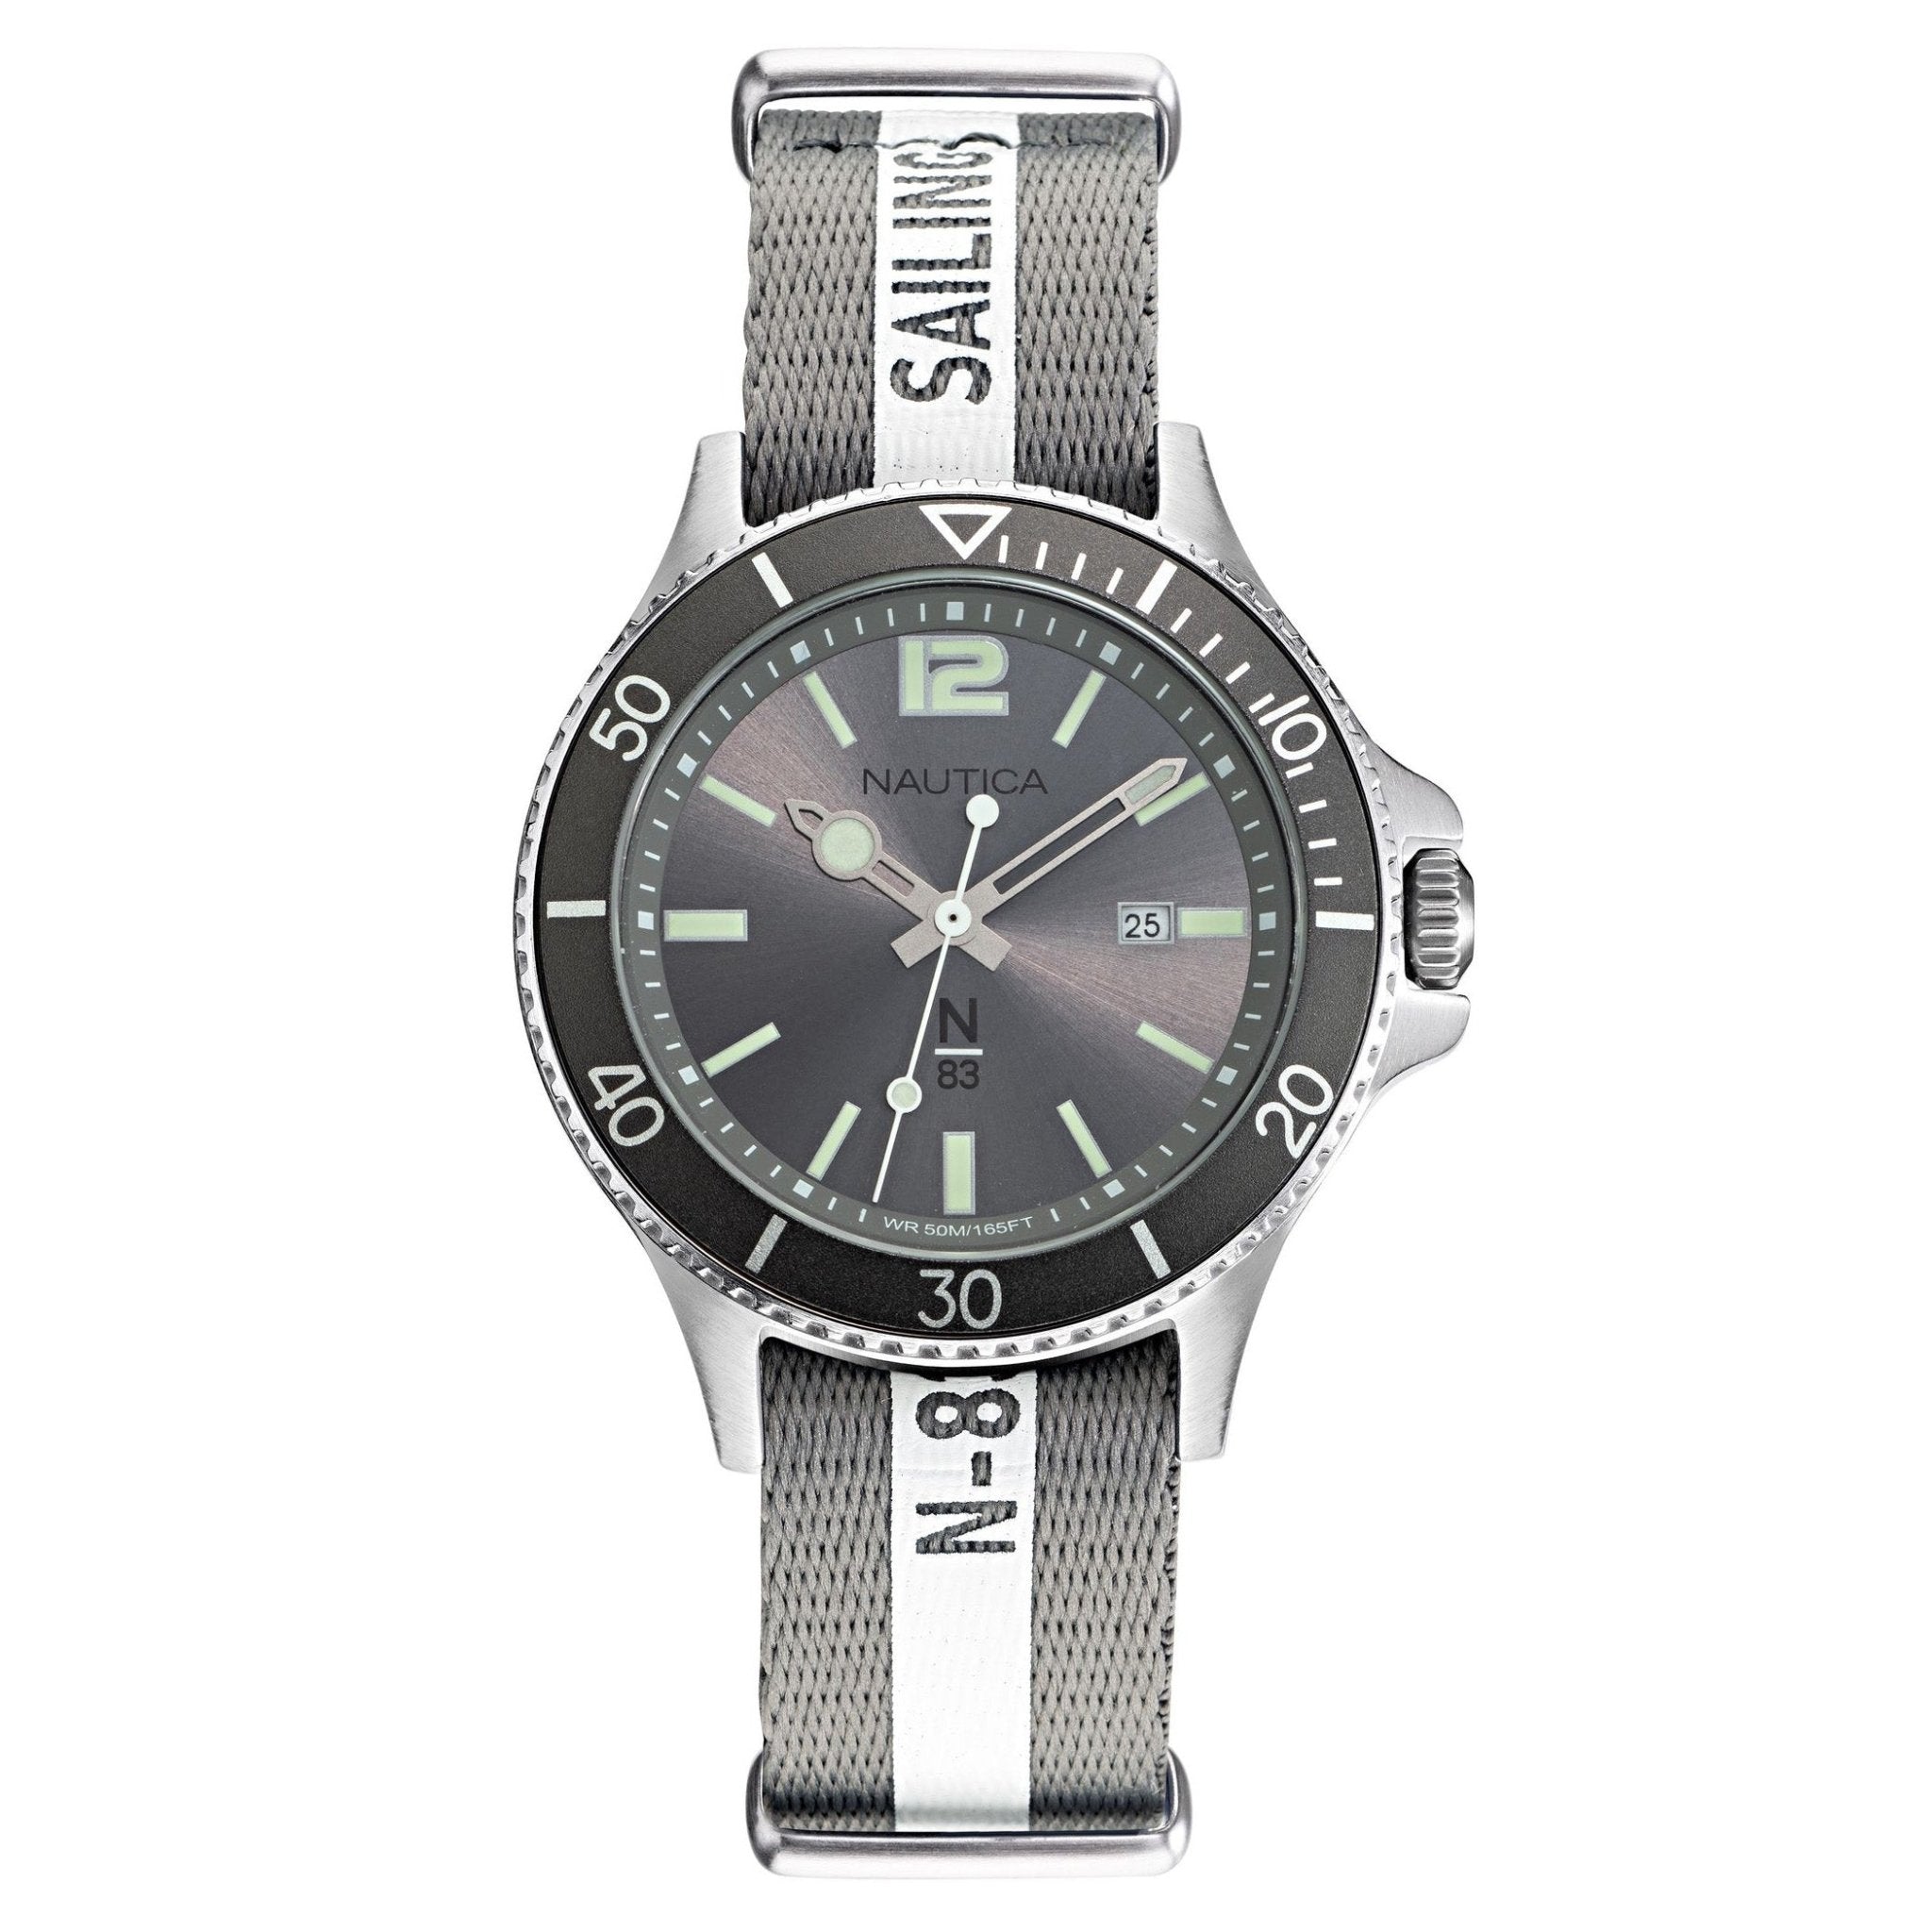 Nautica Men's Watch N-83 Accra Beach Grey NAPABS902 - Watches & Crystals